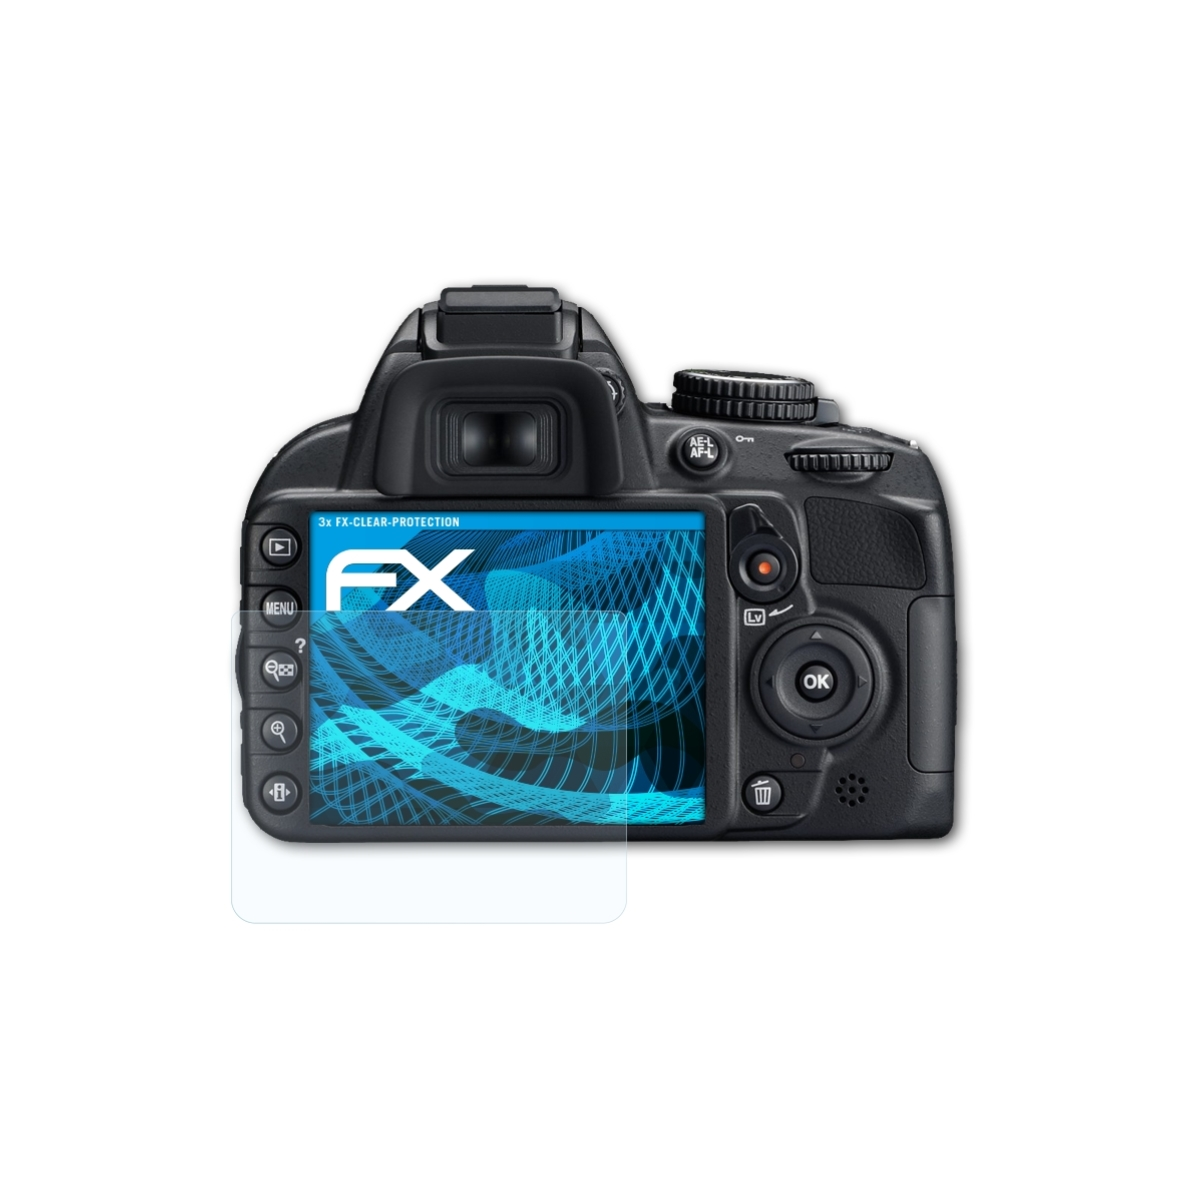 3x Nikon Displayschutz(für FX-Clear ATFOLIX D3100)